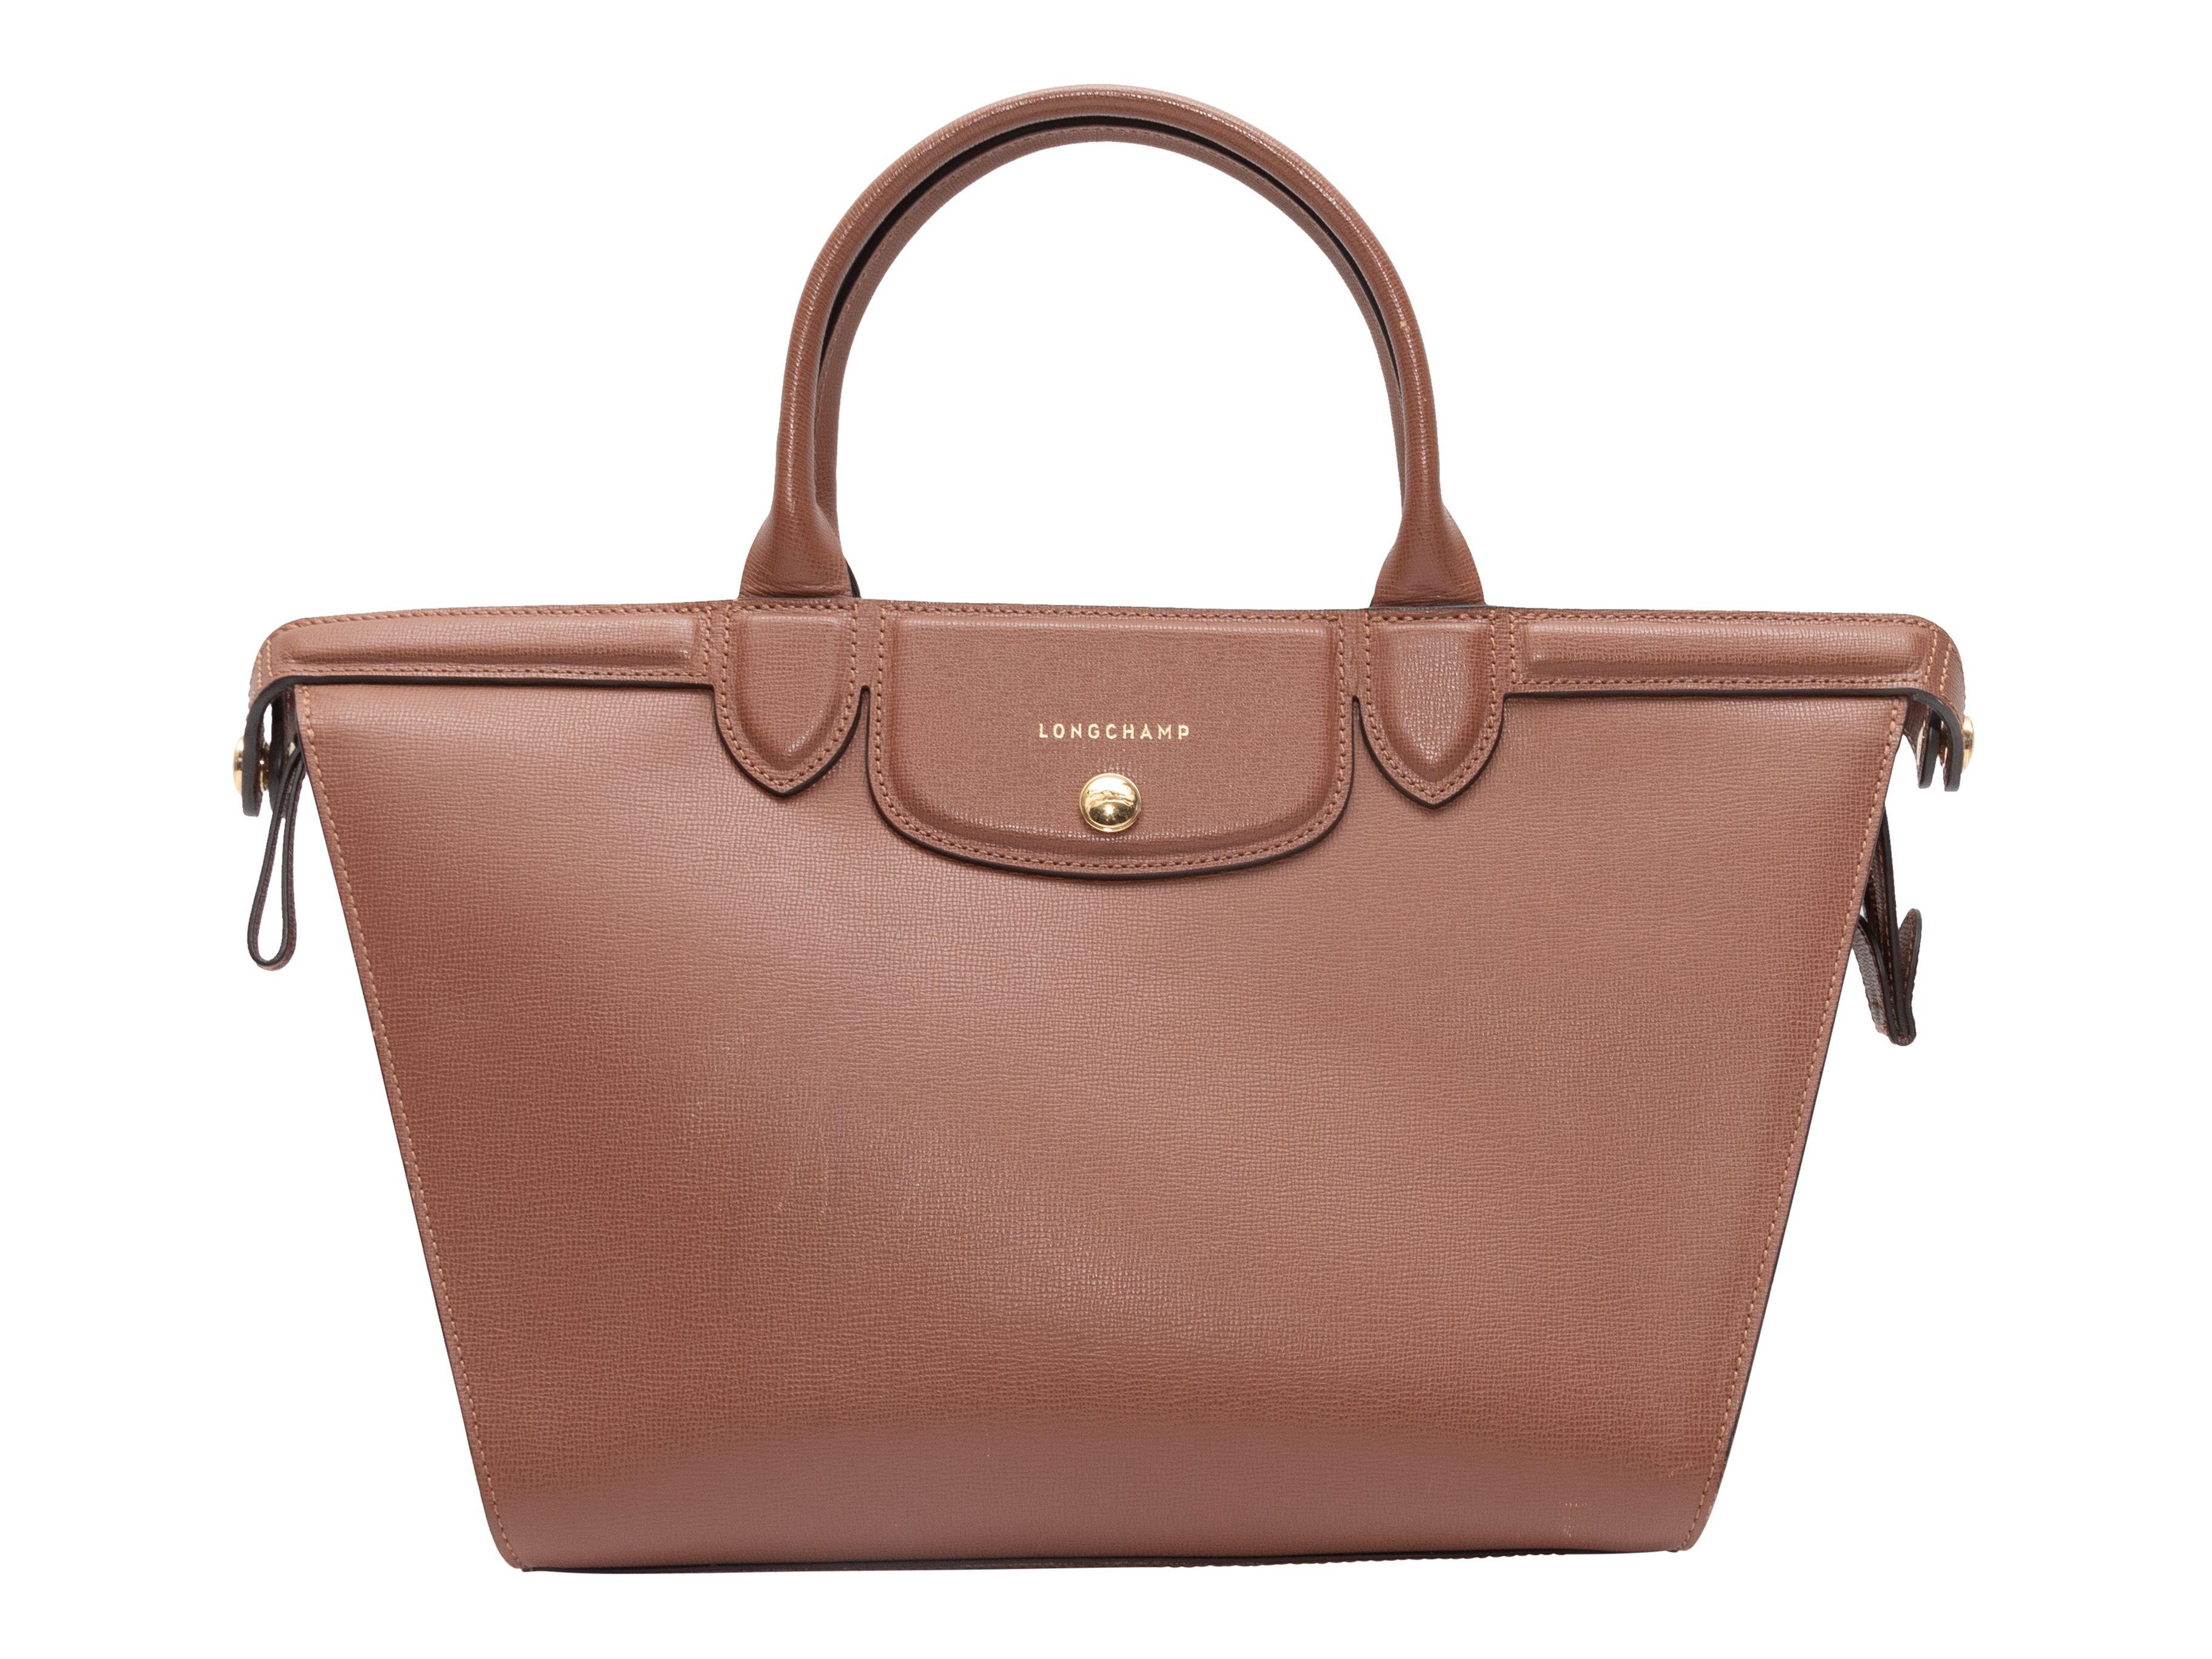 Women's Longchamp Brown Leather Tote Bag